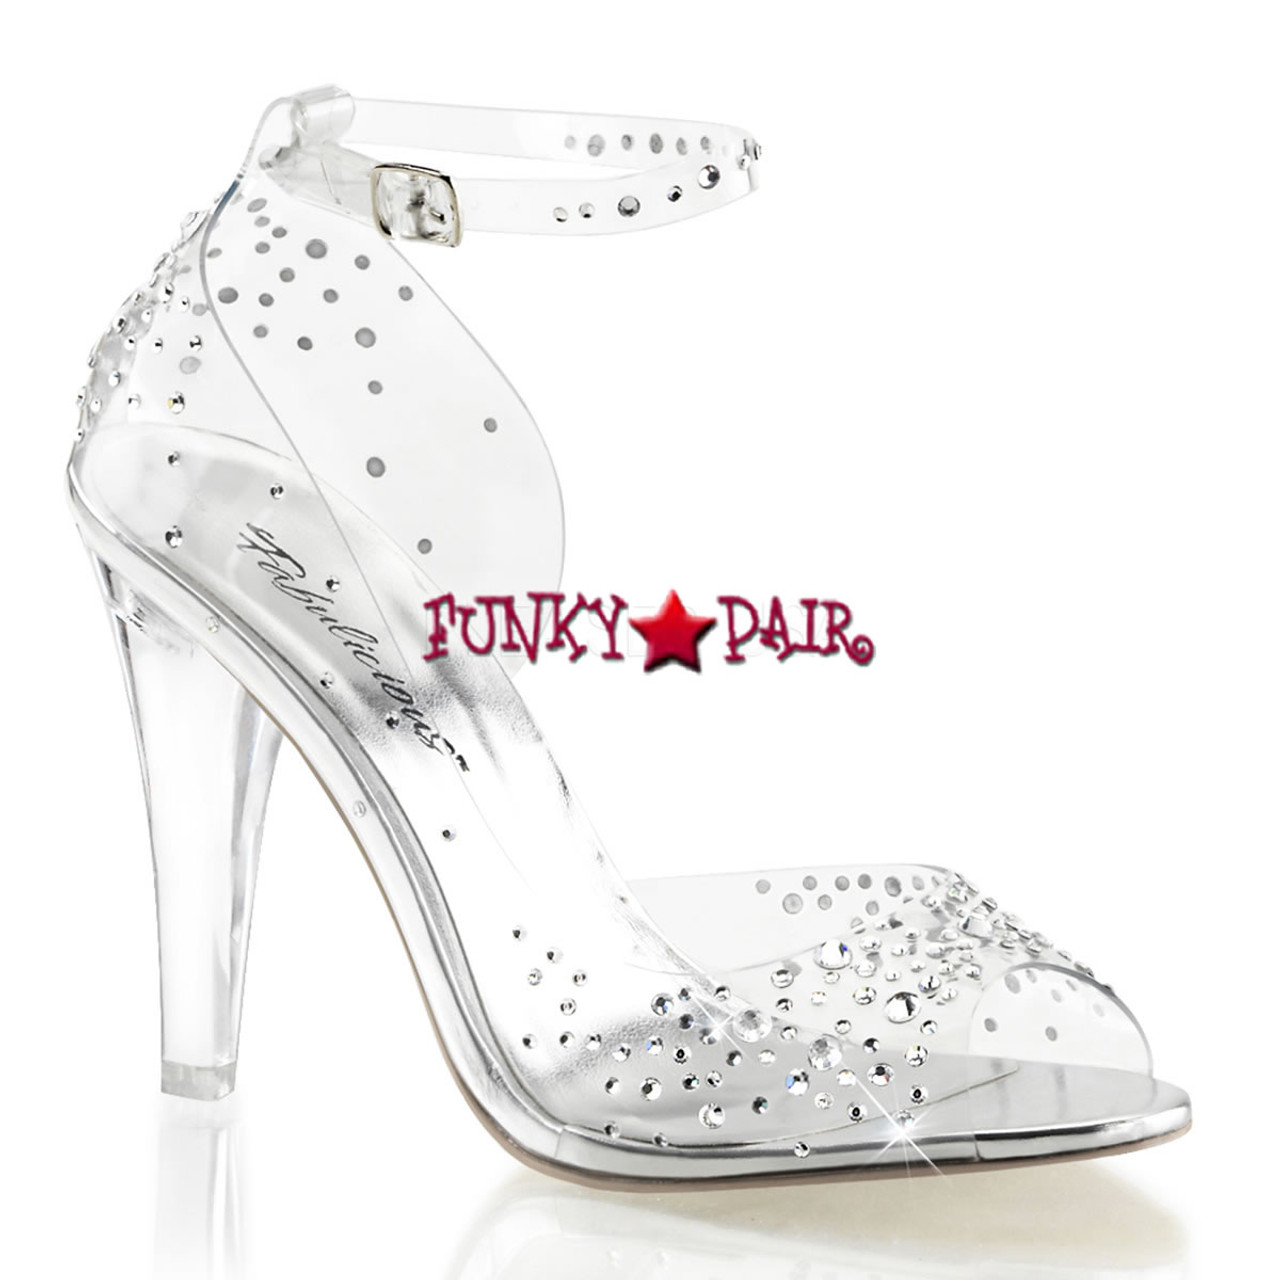 3" Clear Cinderella Princess Glass Slippers Wedding Heels